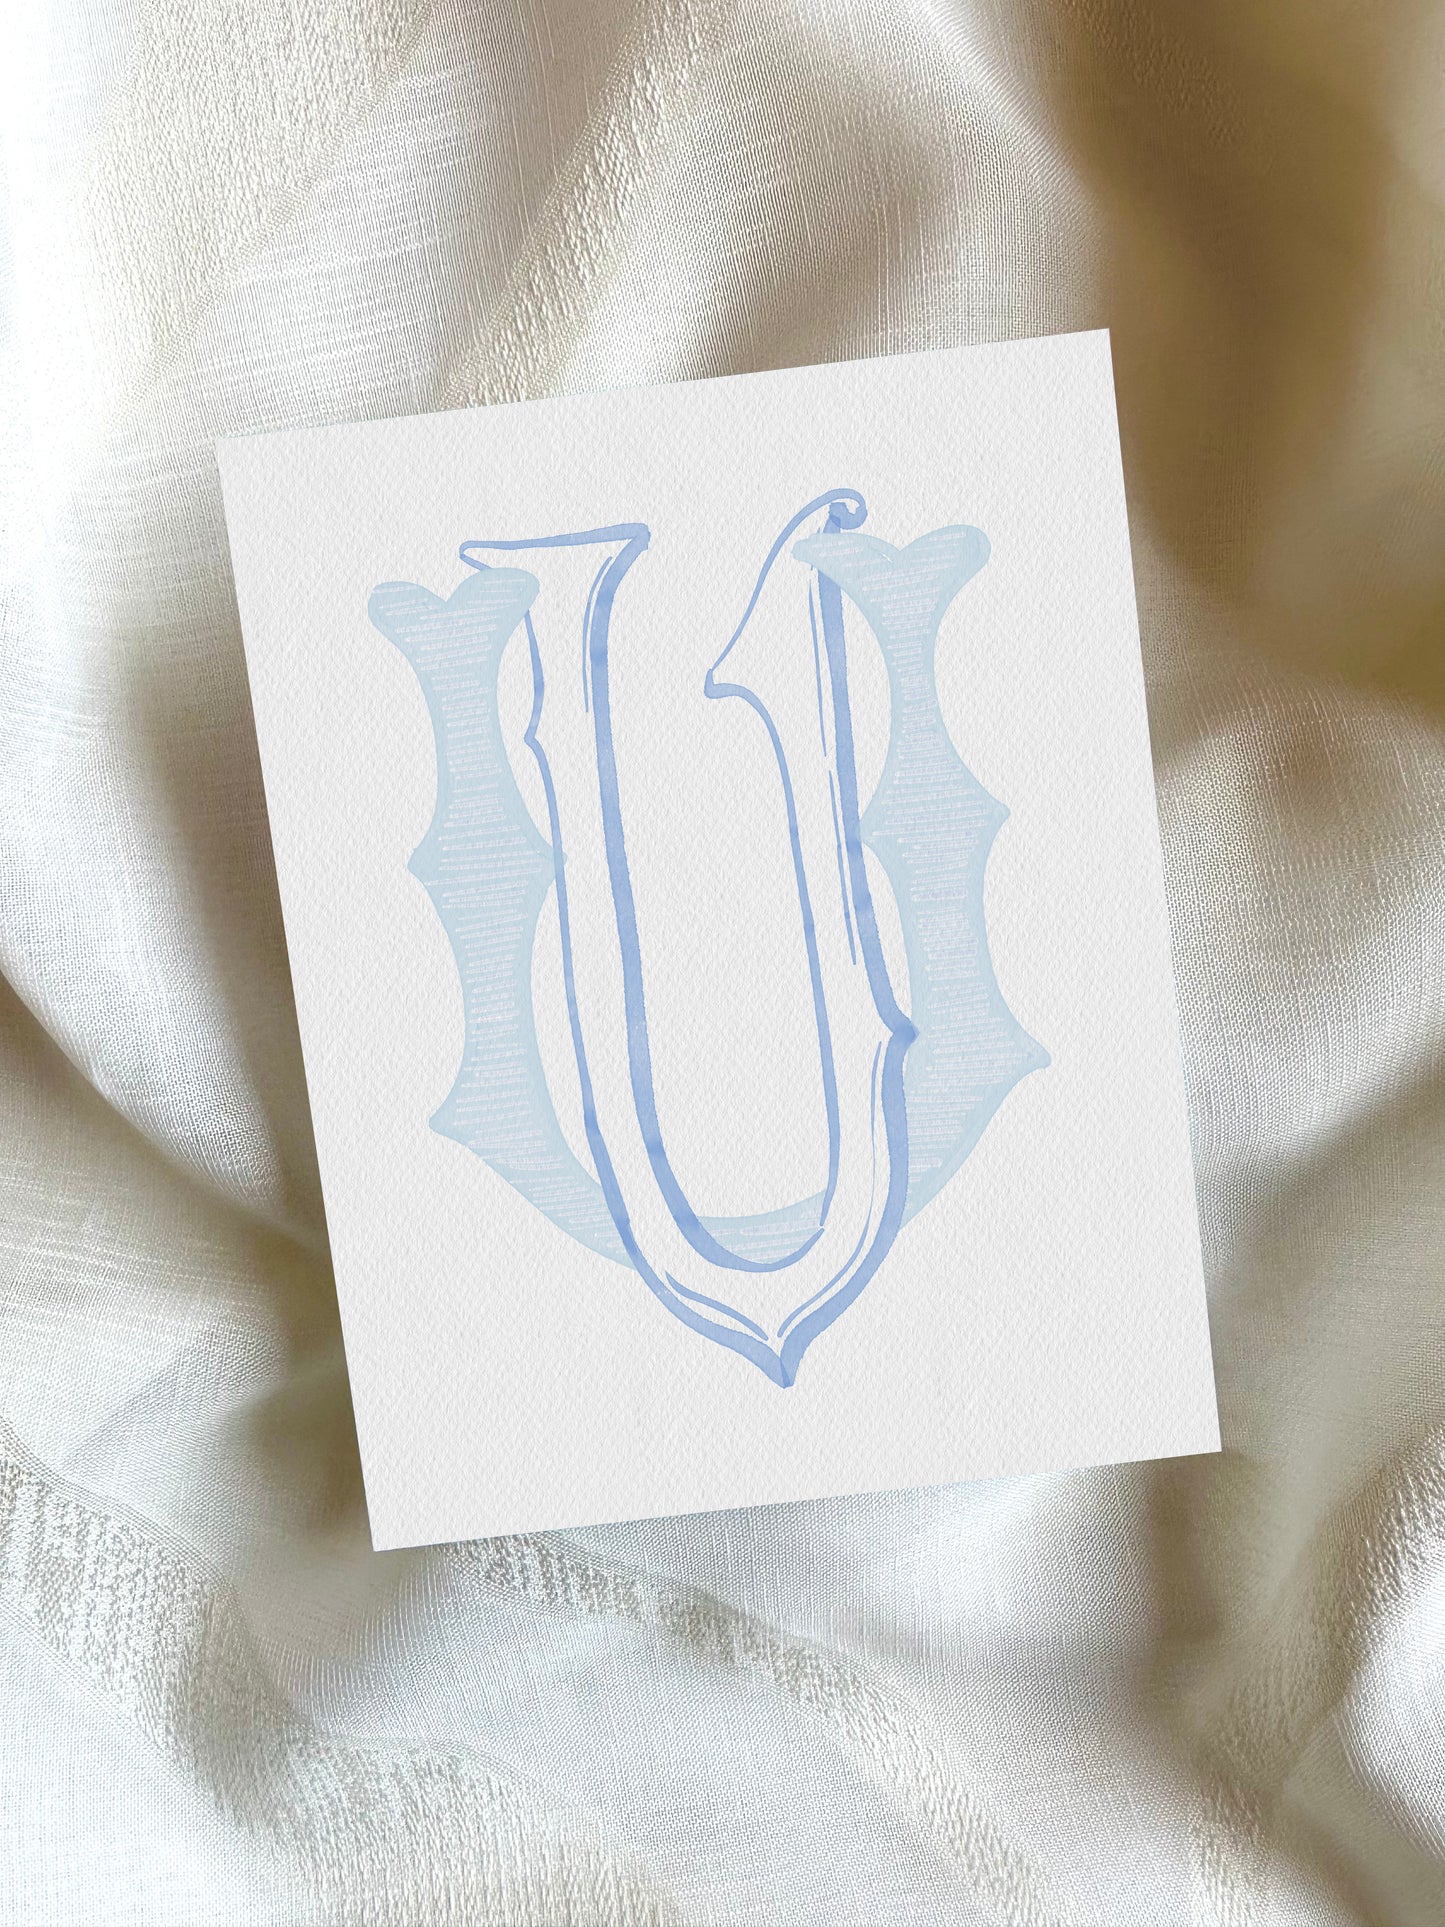 2 Letter Monogram with Letters UU | Digital Download - Wedding Monogram SVG, Personal Logo, Wedding Logo for Wedding Invitations The Wedding Crest Lab